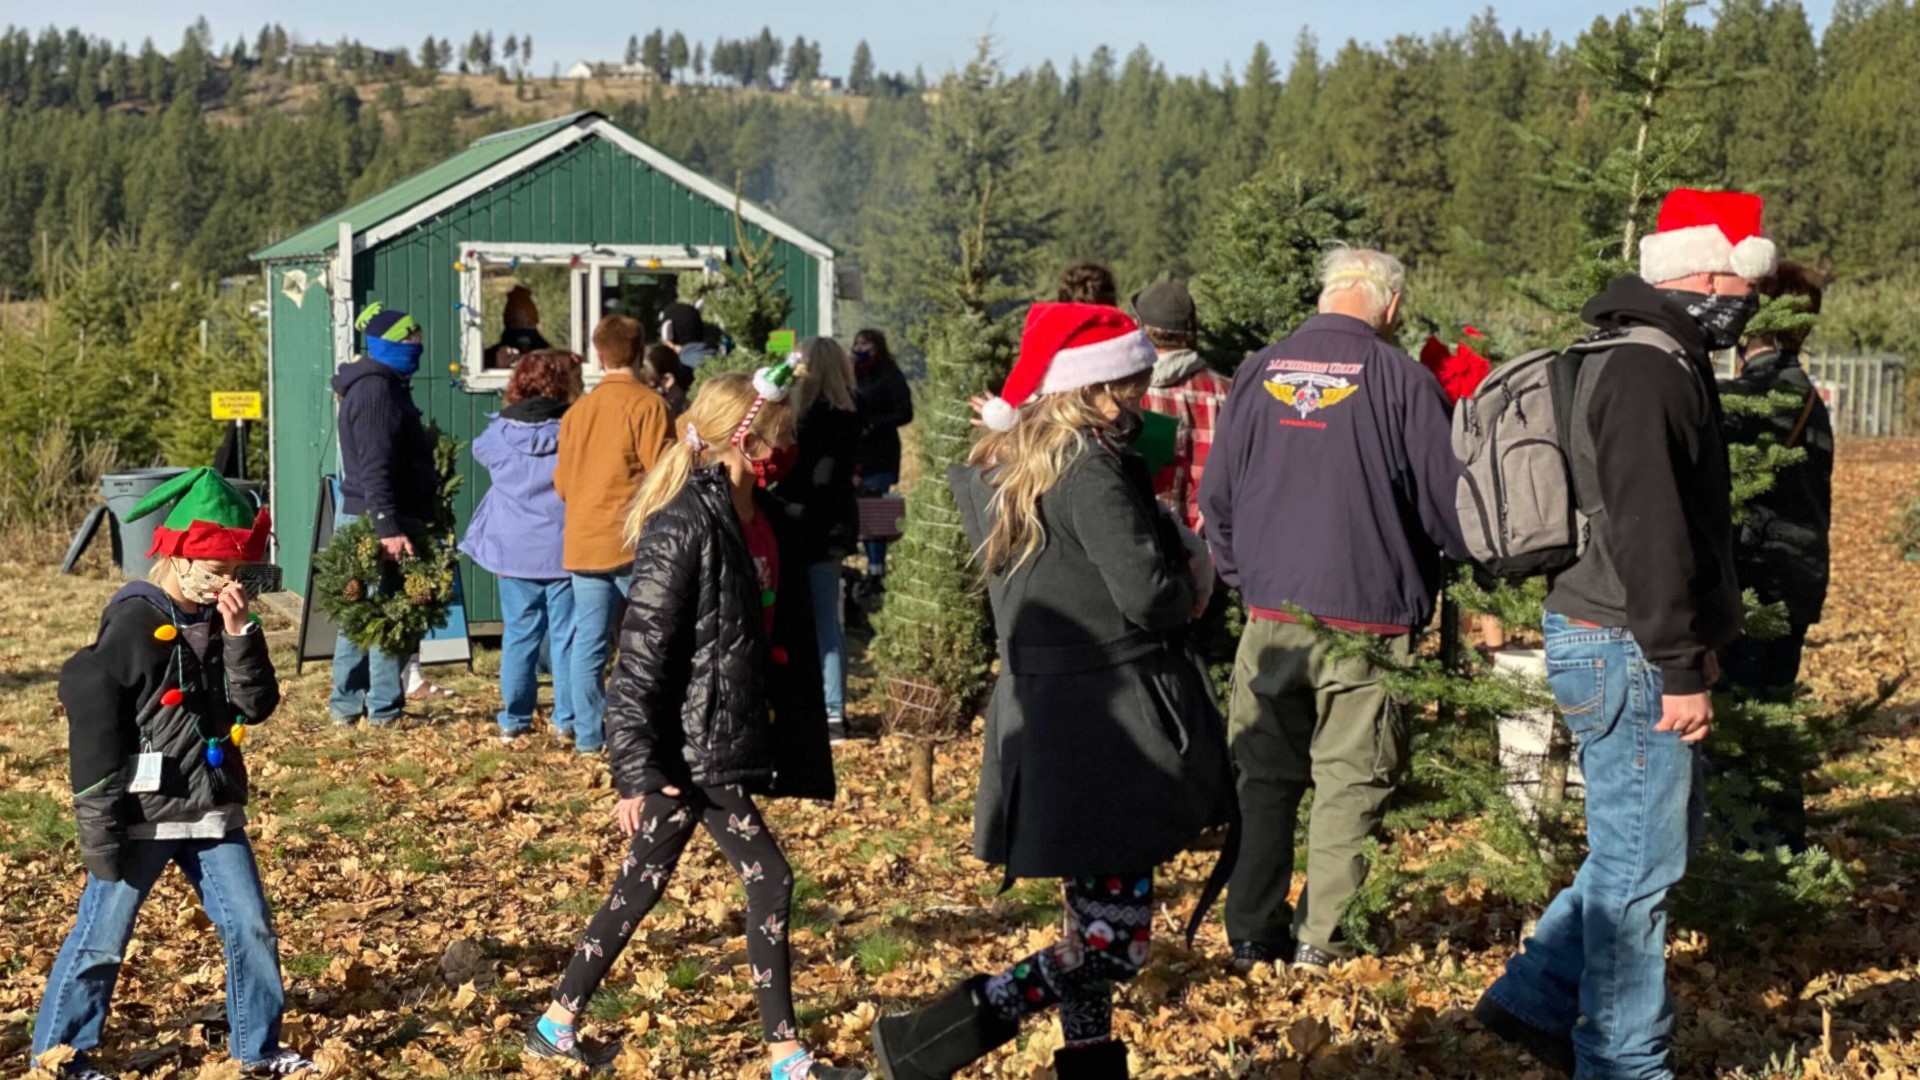 Hutton Settlement Children's Home opened their annual Christmas tree farm fundraiser. The money goes toward educational programming.